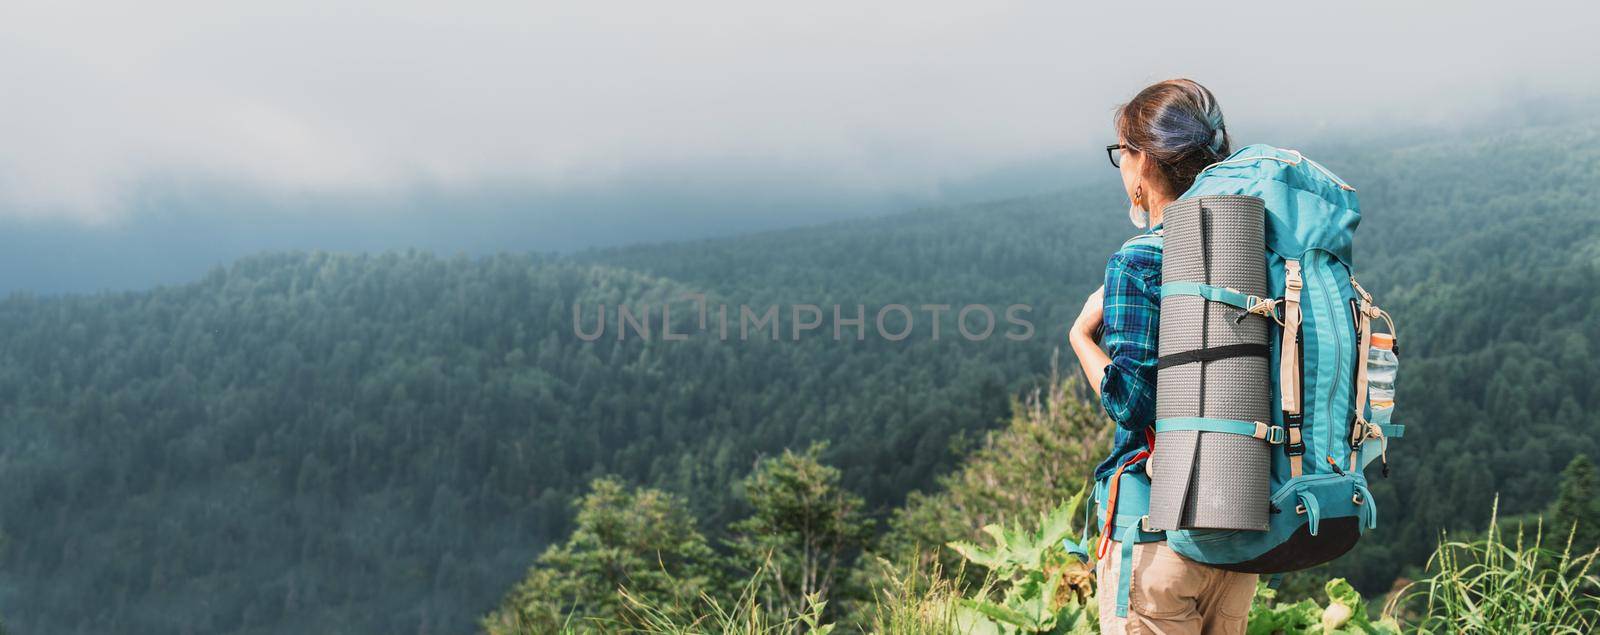 Explorer woman in summer mountains by alexAleksei